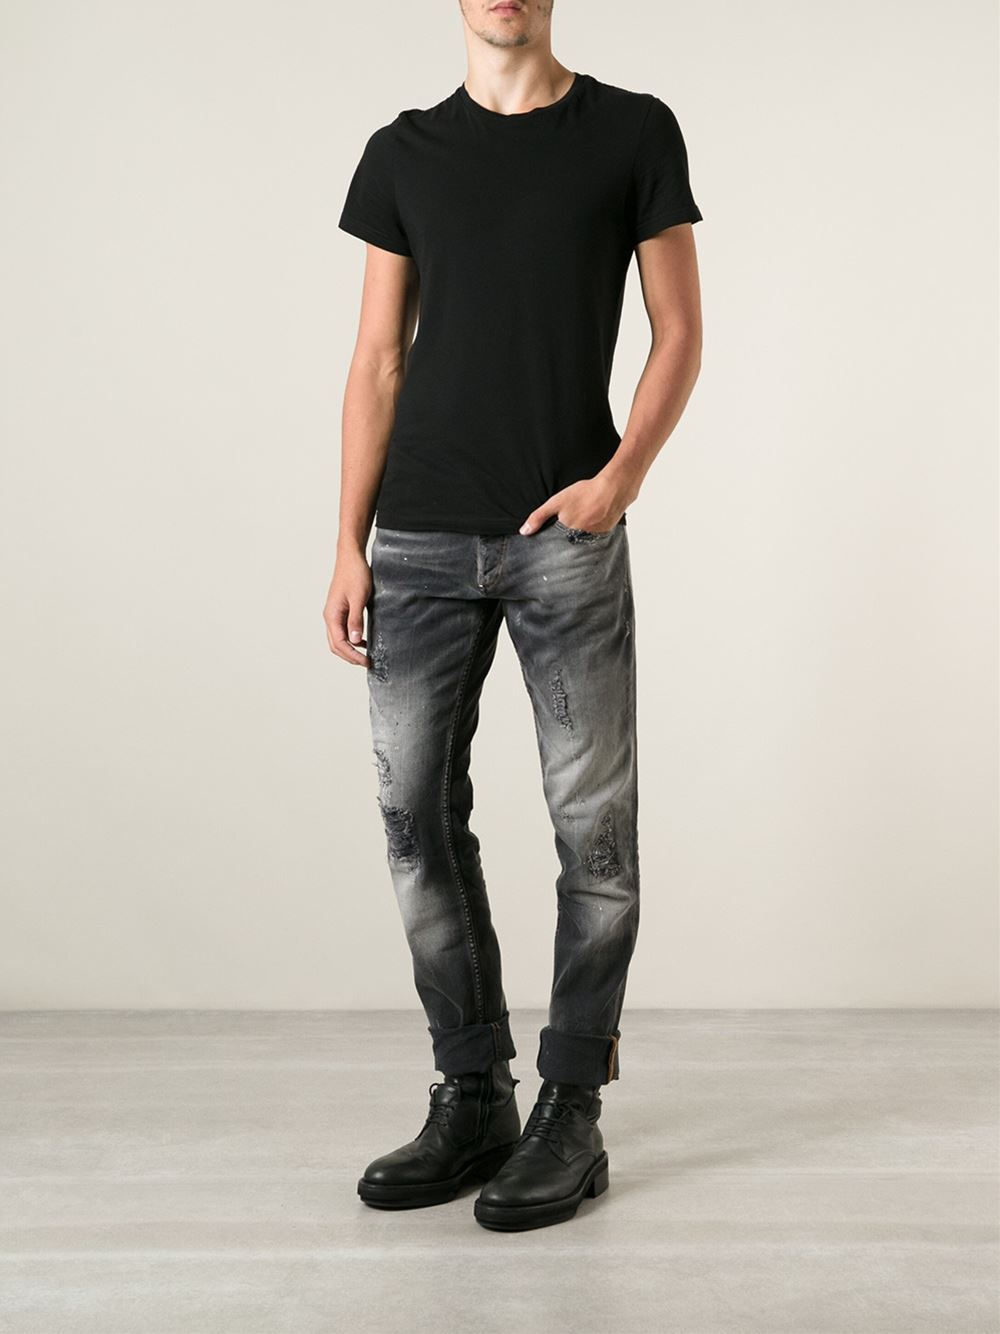 Lyst - Philipp Plein Cowboy Jeans in Black for Men